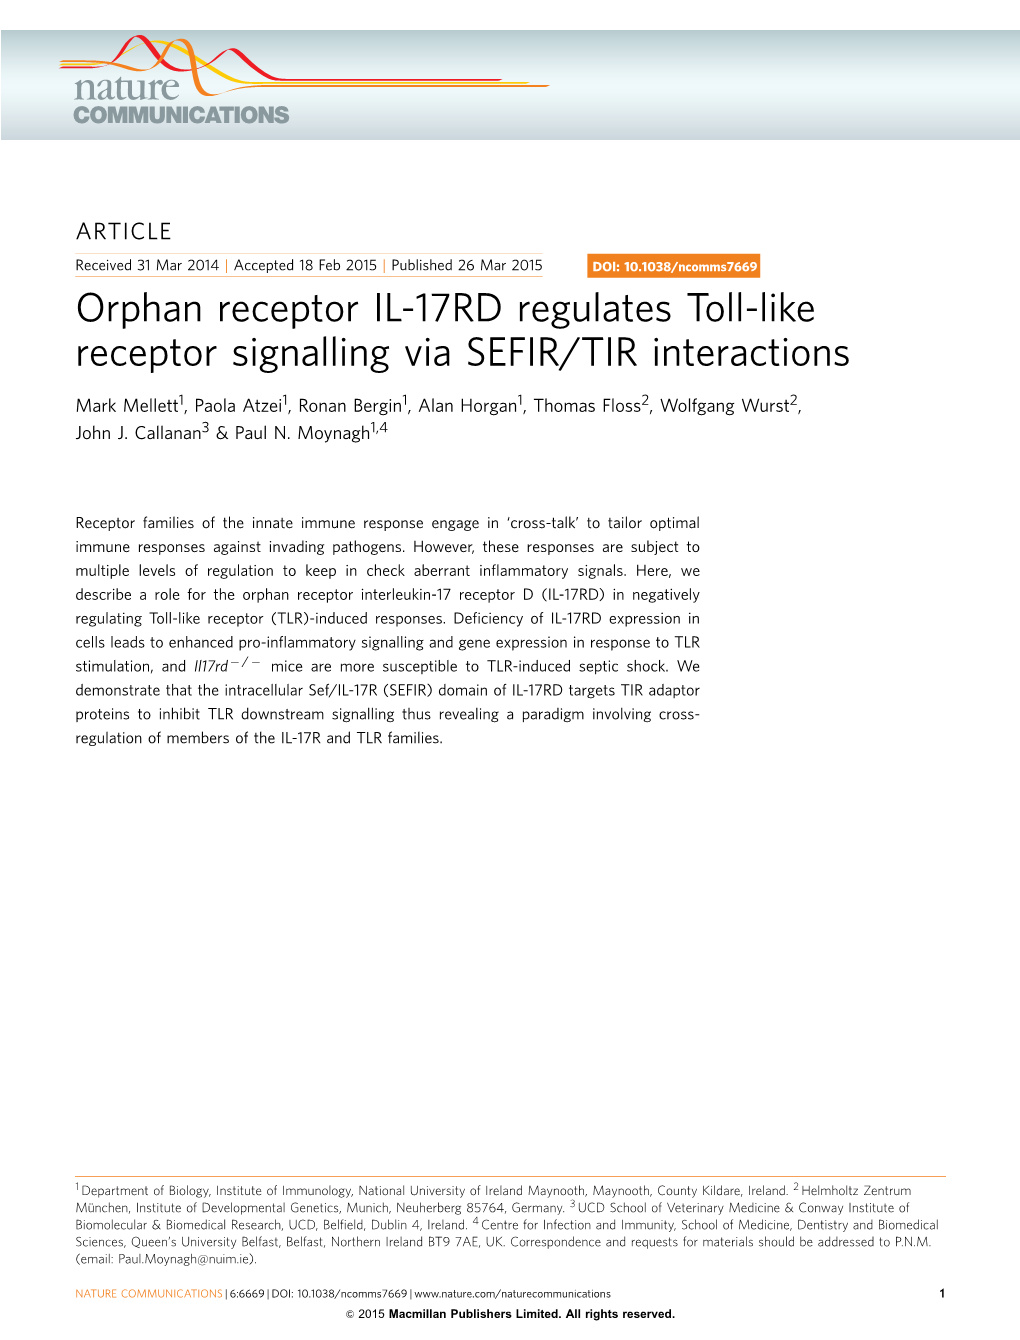 Orphan Receptor IL-17RD Regulates Toll-Like Receptor Signalling Via SEFIR/TIR Interactions